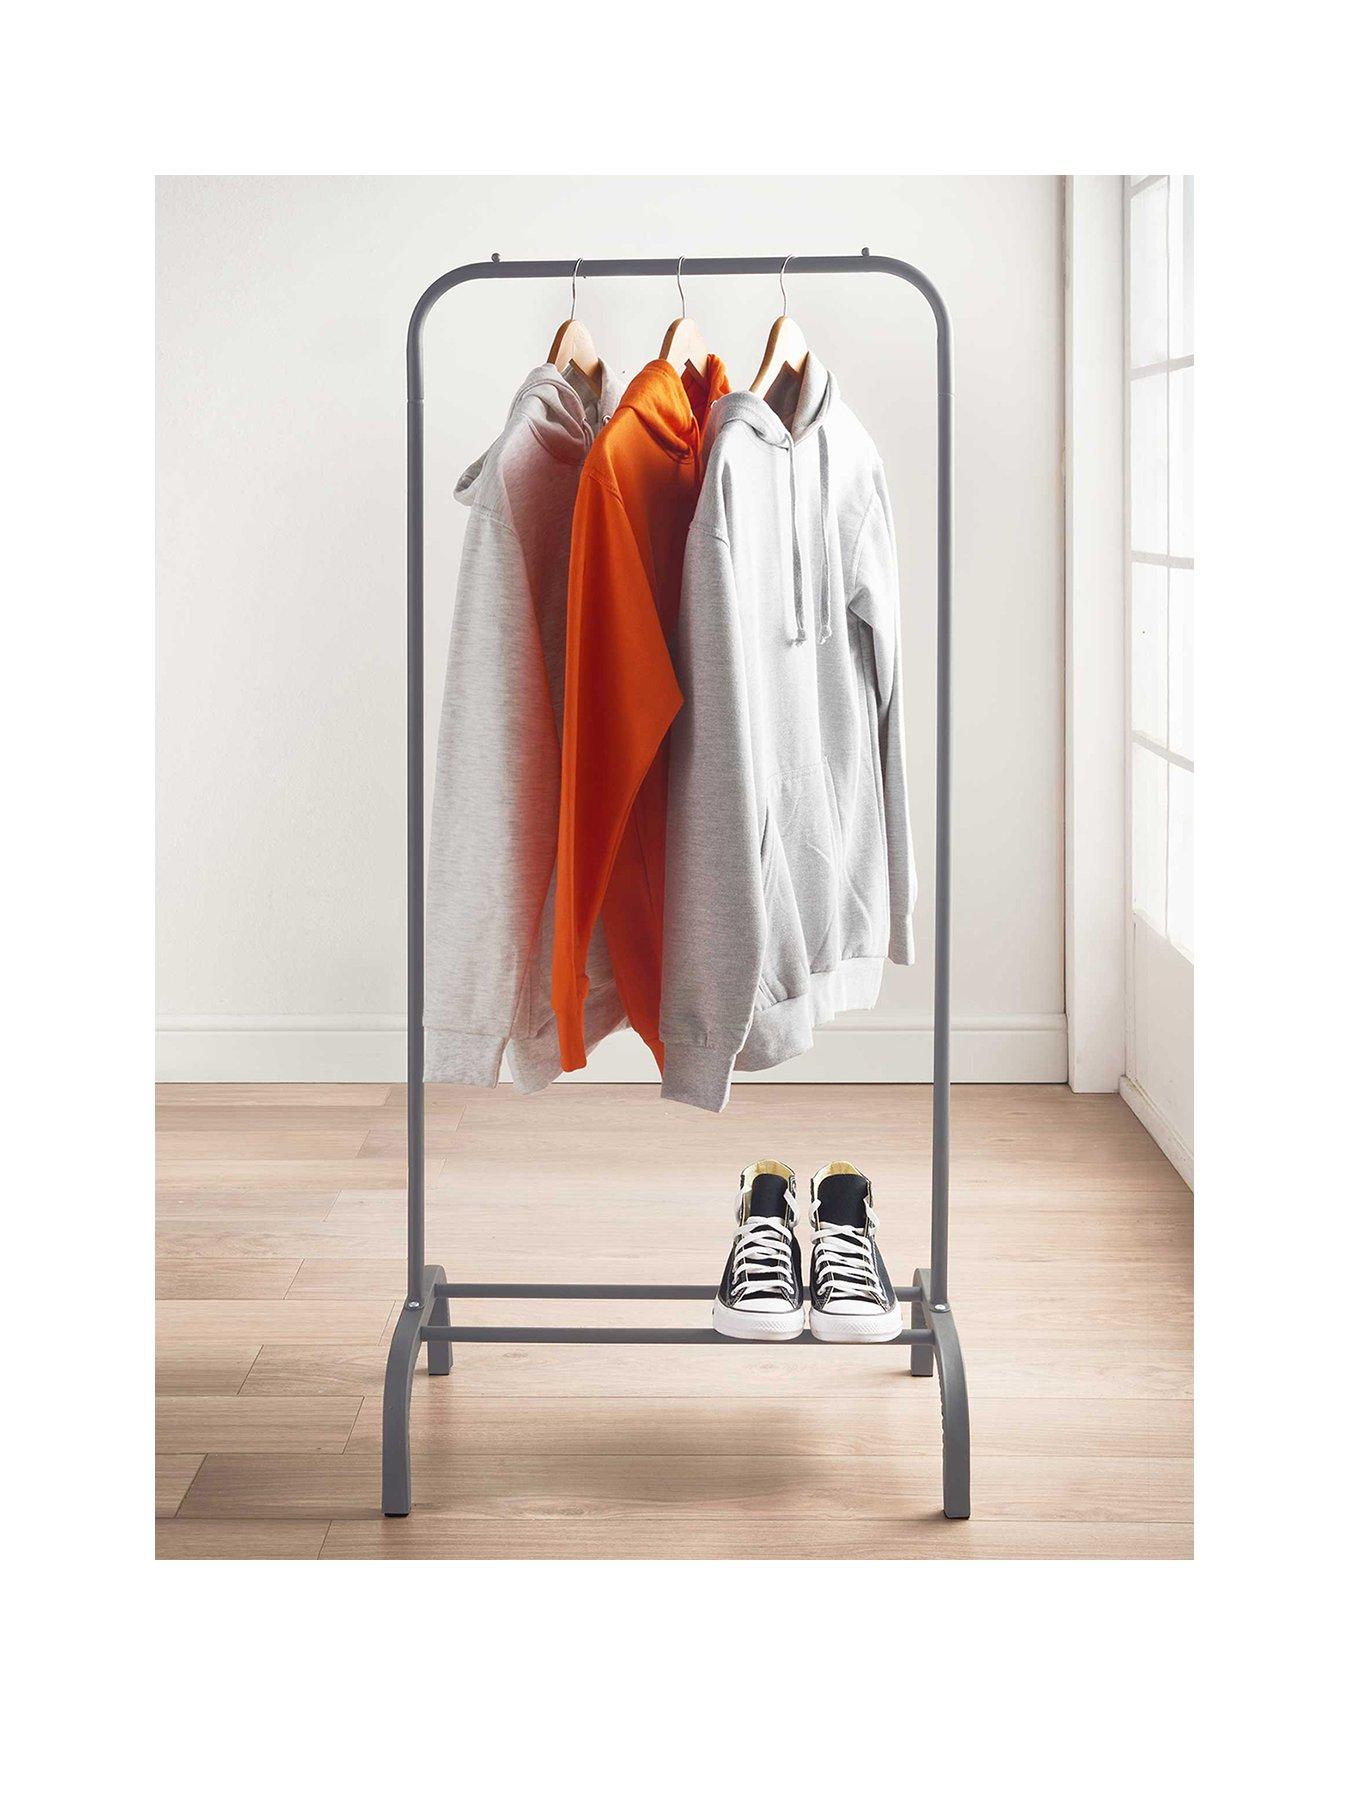 Shop/Store Design Rack Stand for Women's Underwear (ZS-923